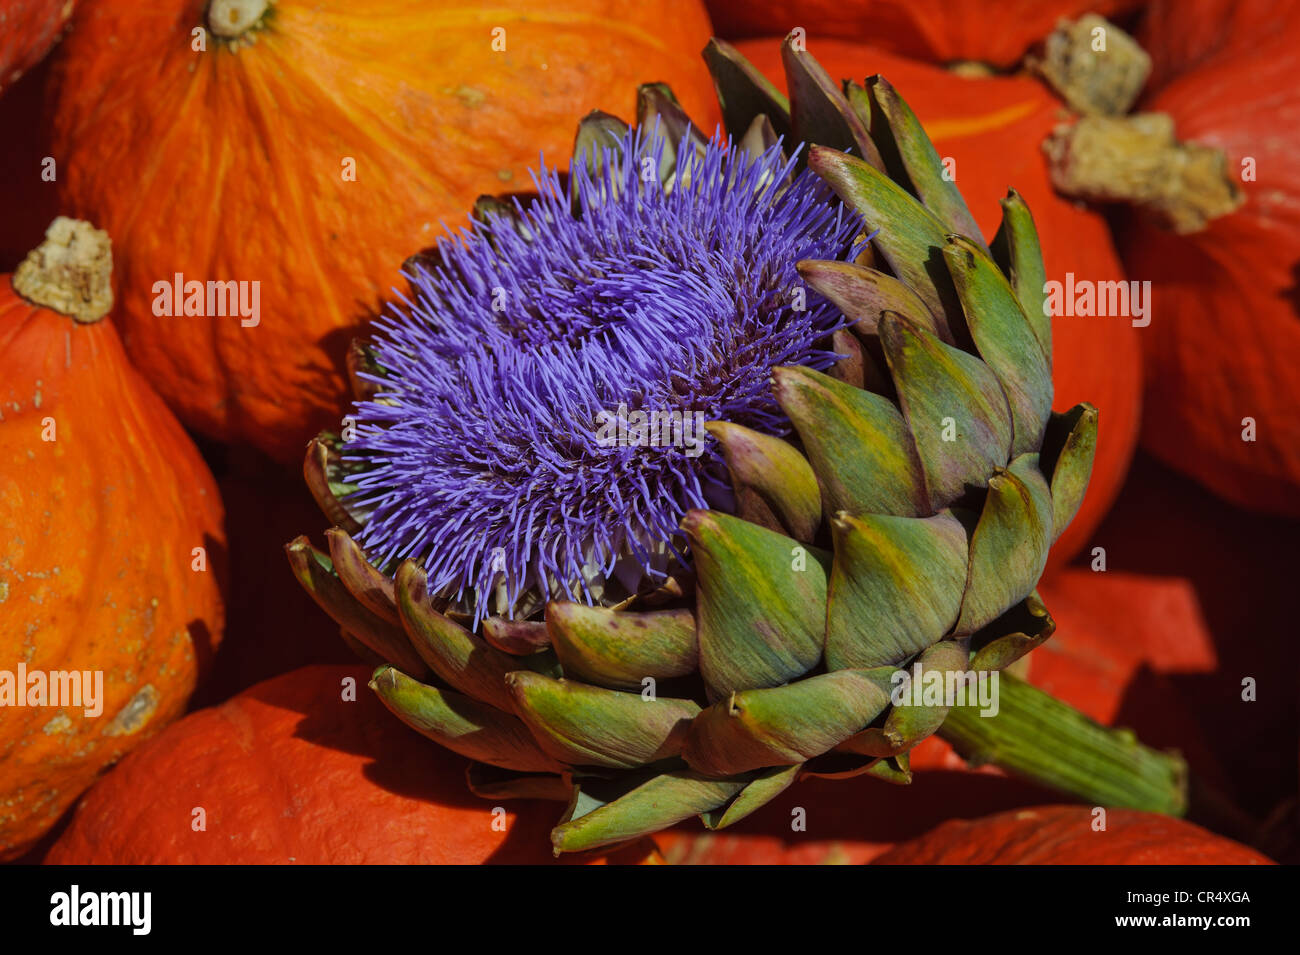 Artichoke (Cynara cardunculus) flowers on pumpkins Stock Photo